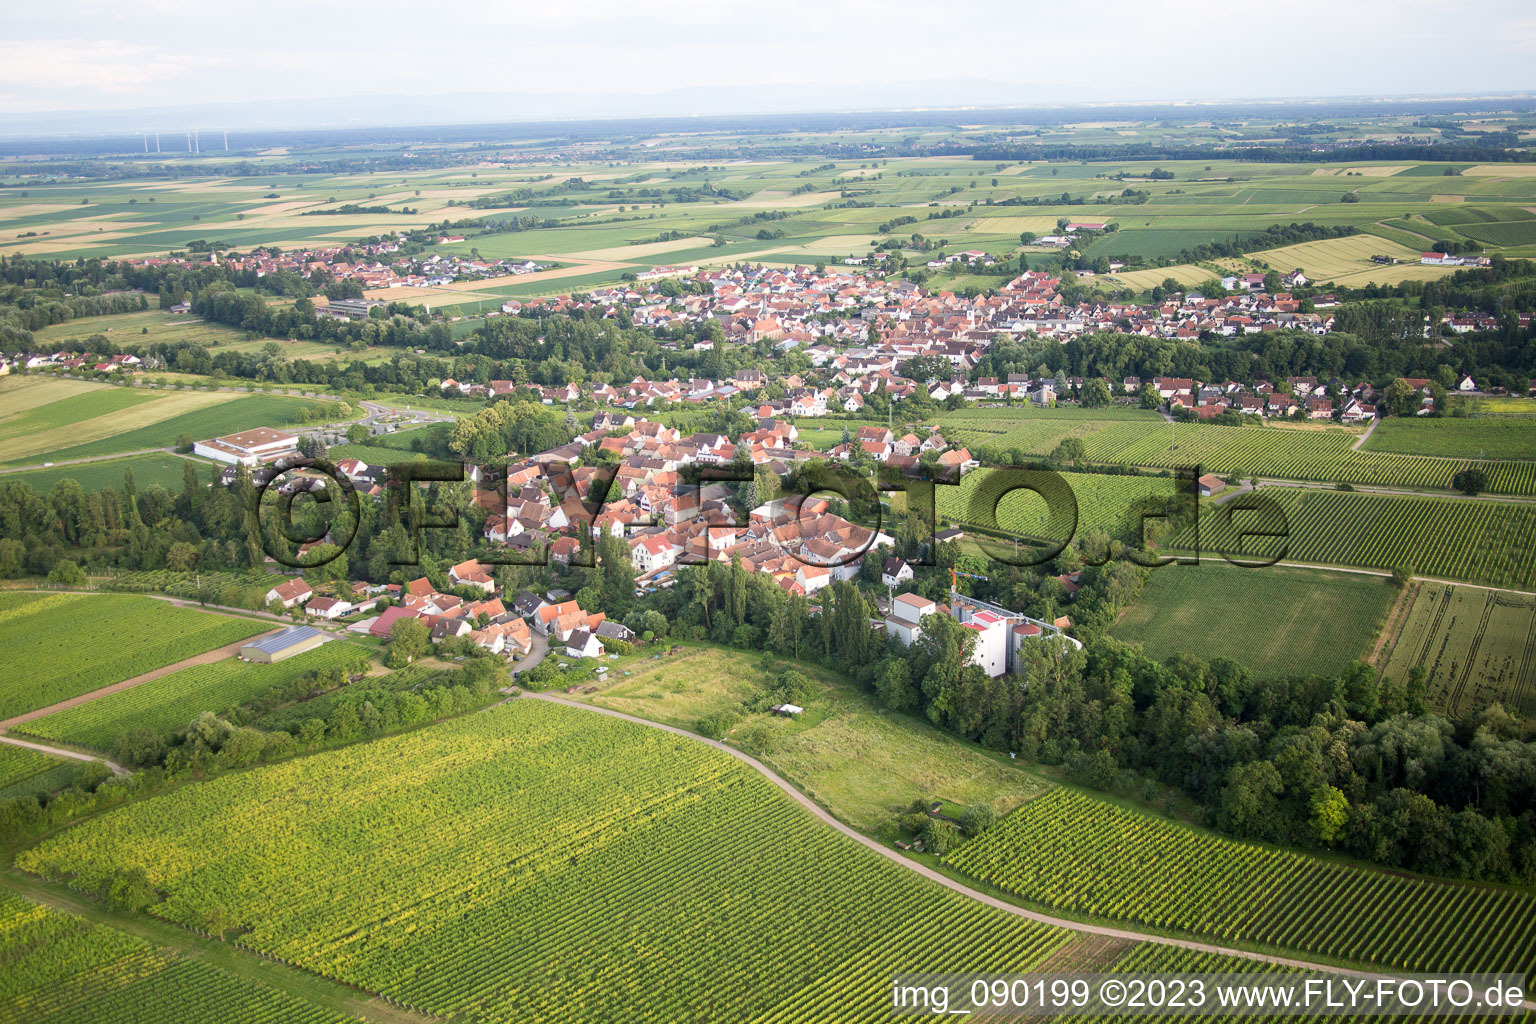 Drone image of District Appenhofen in Billigheim-Ingenheim in the state Rhineland-Palatinate, Germany